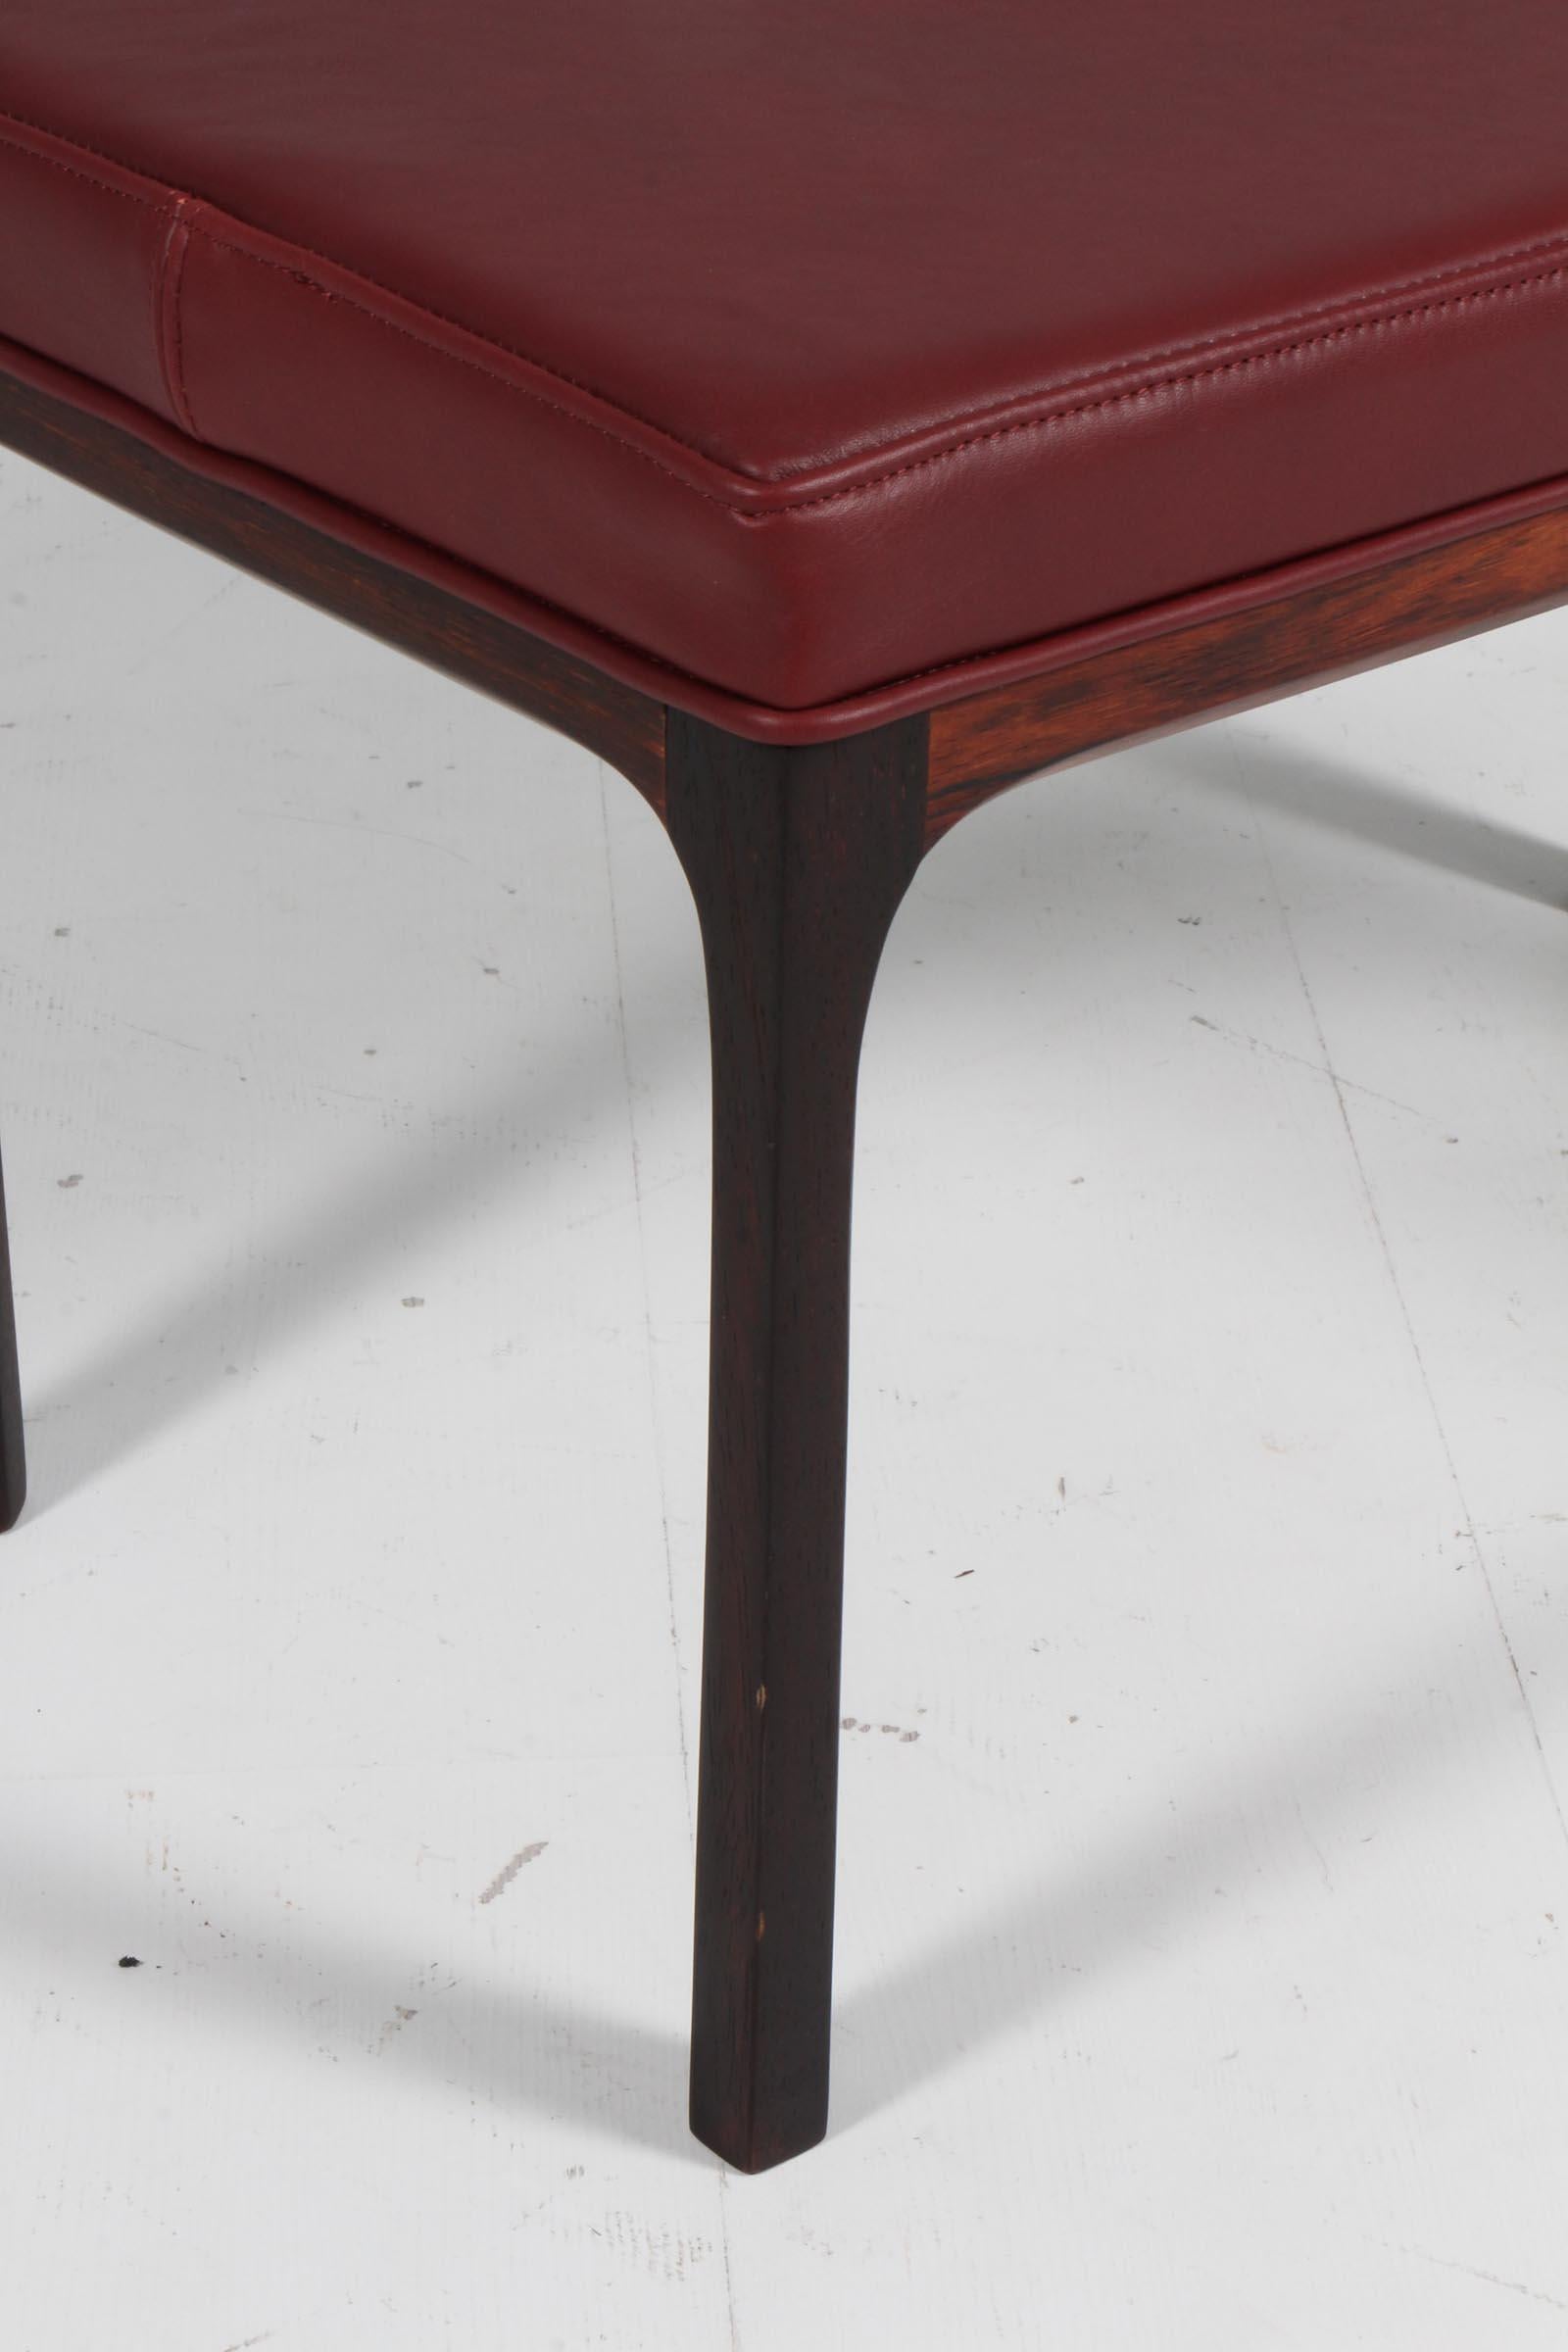 Scandinavian Modern Kai Kristiansen for Aksel Kjersgaard, stool with leather and rosewood